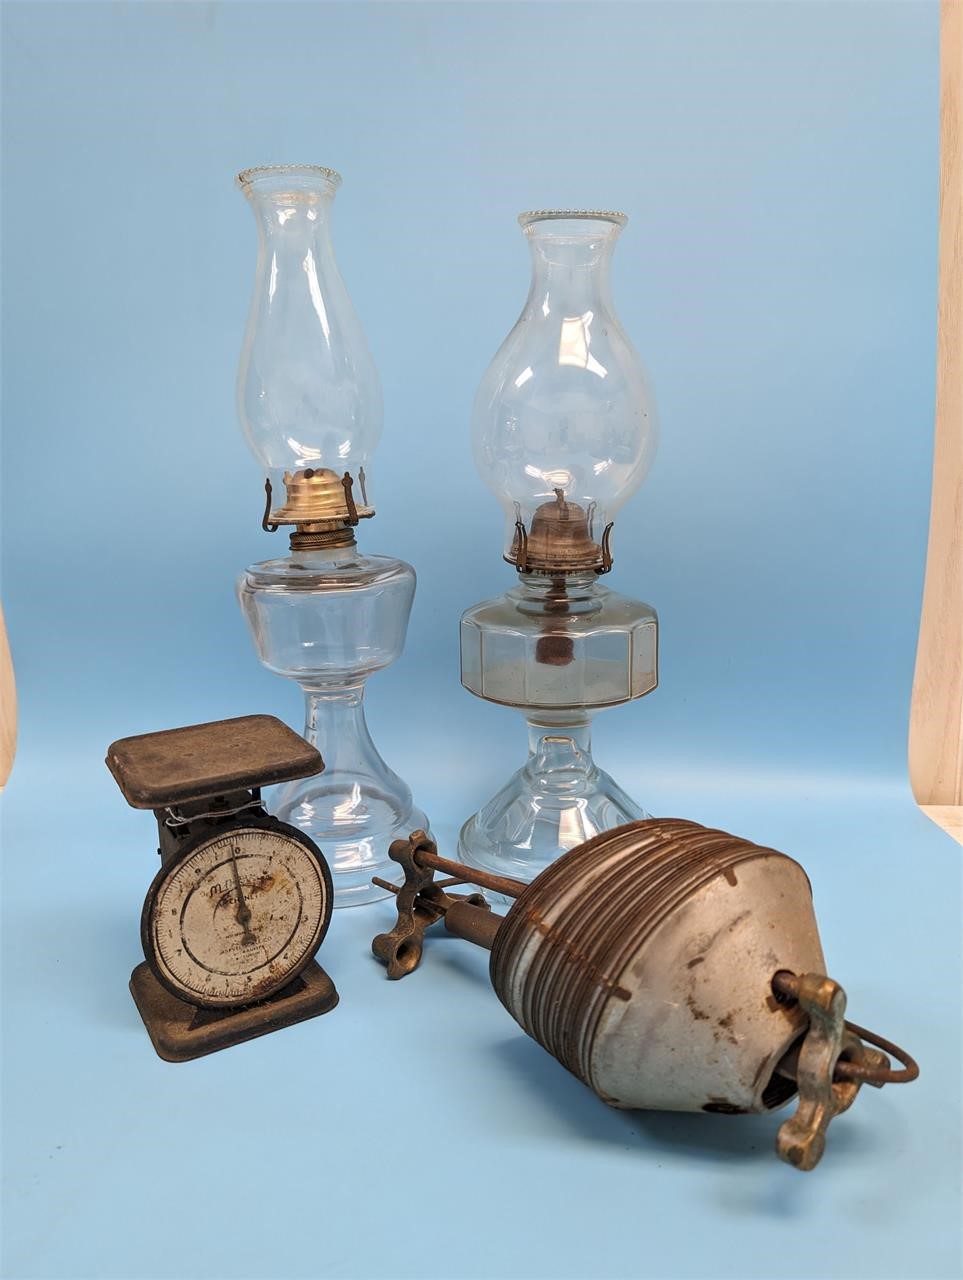 Antique Lamps, Scale, More